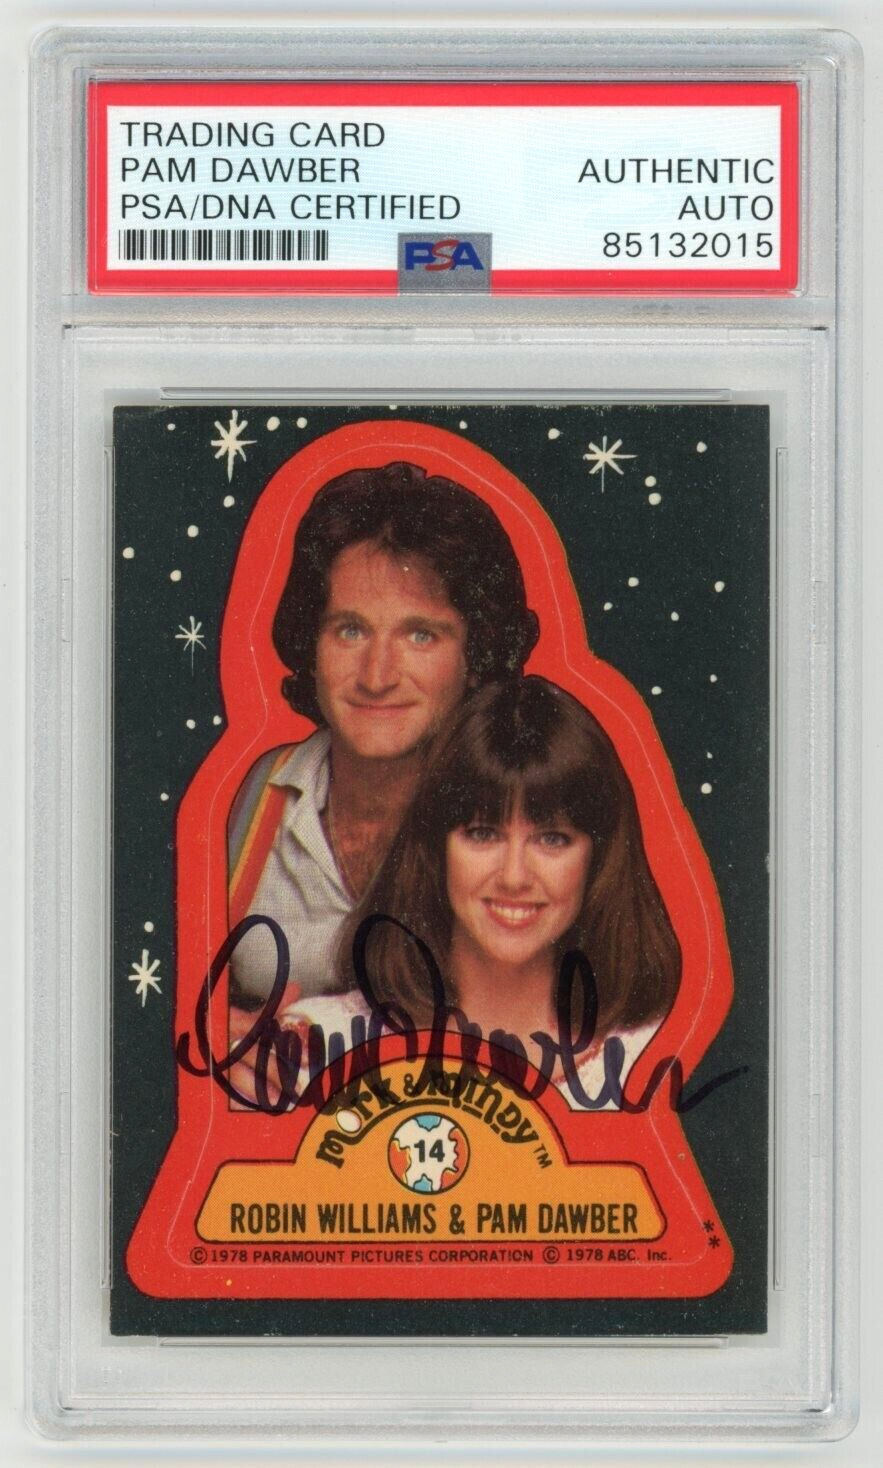 PAM DAWBER Signed 1978 Topps Mork & Mindy Sticker Card #14 - 70s Actress - PSA